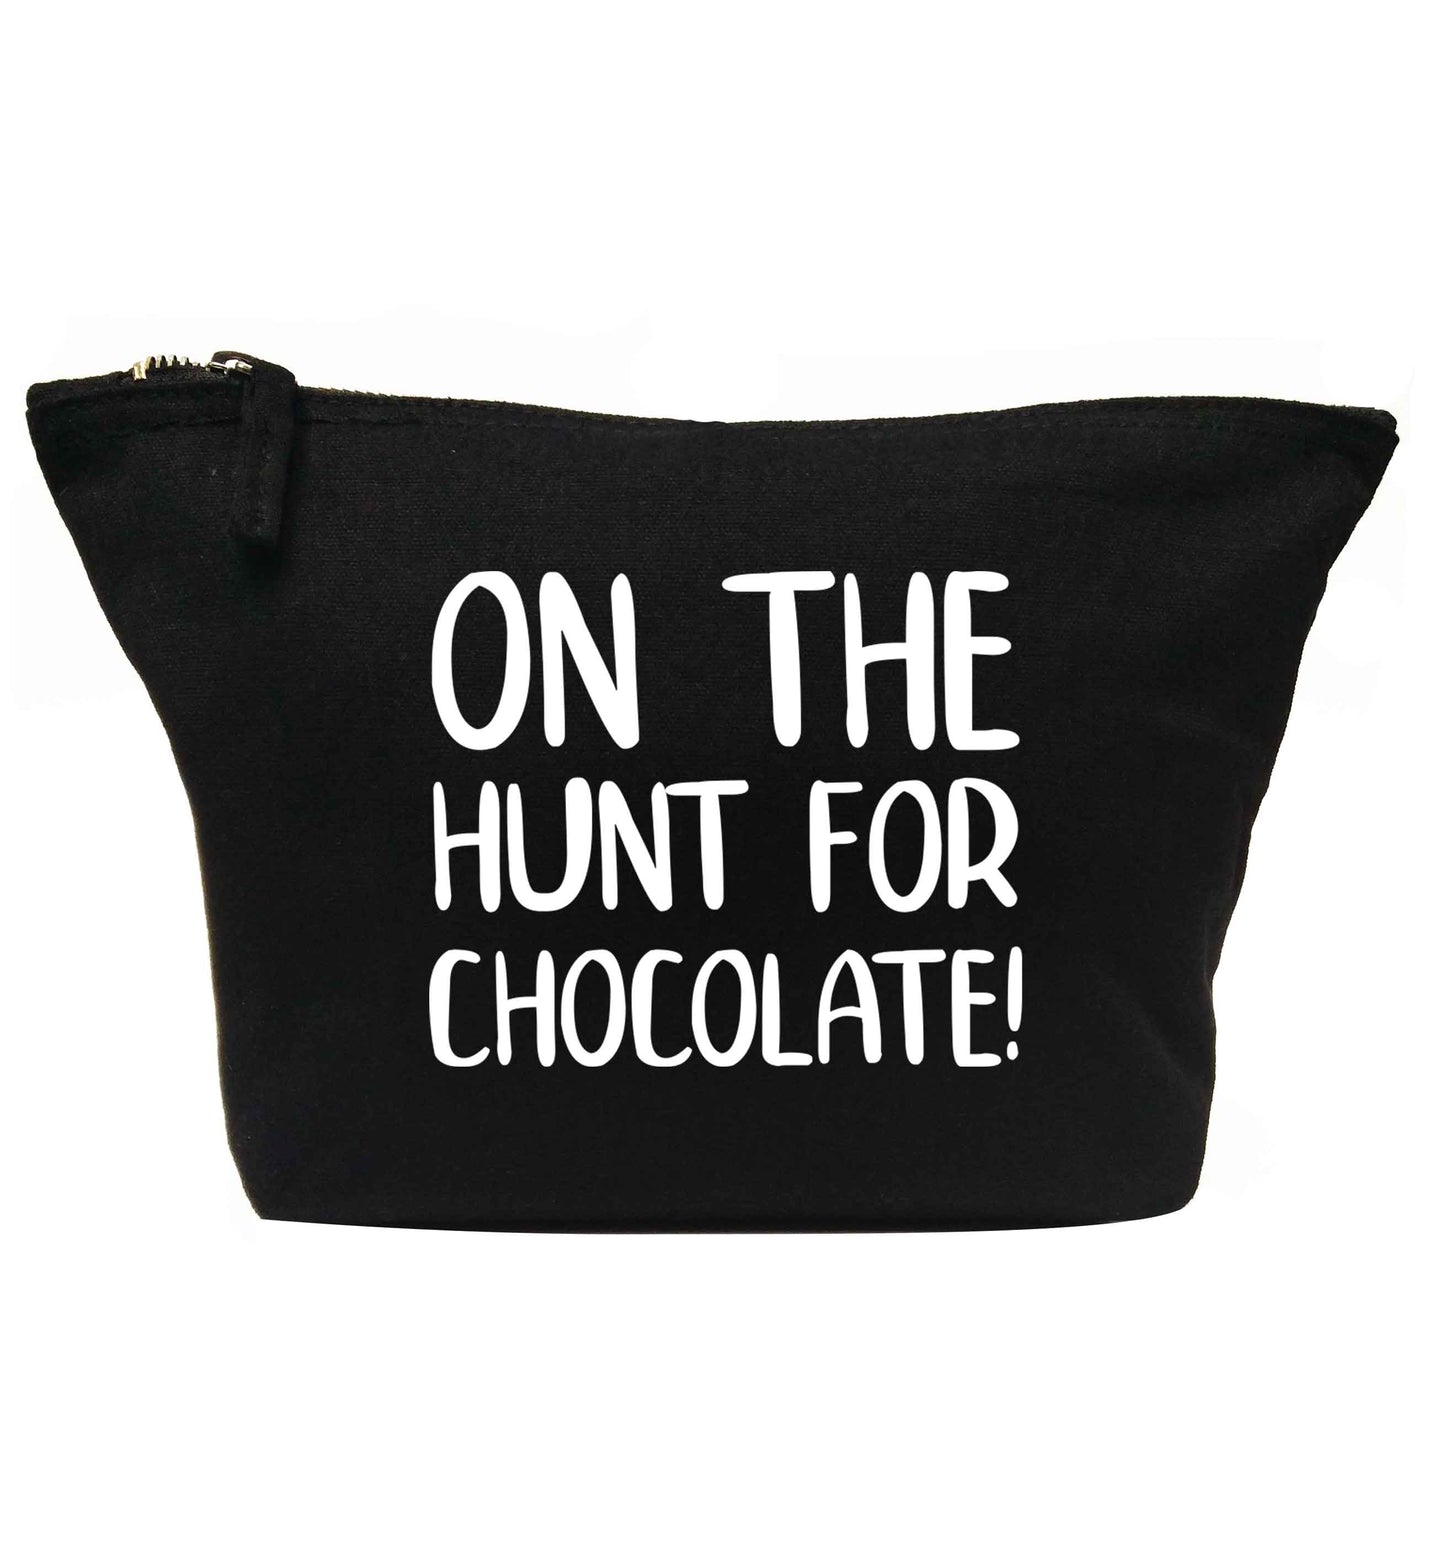 On the hunt for chocolate! | Makeup / wash bag